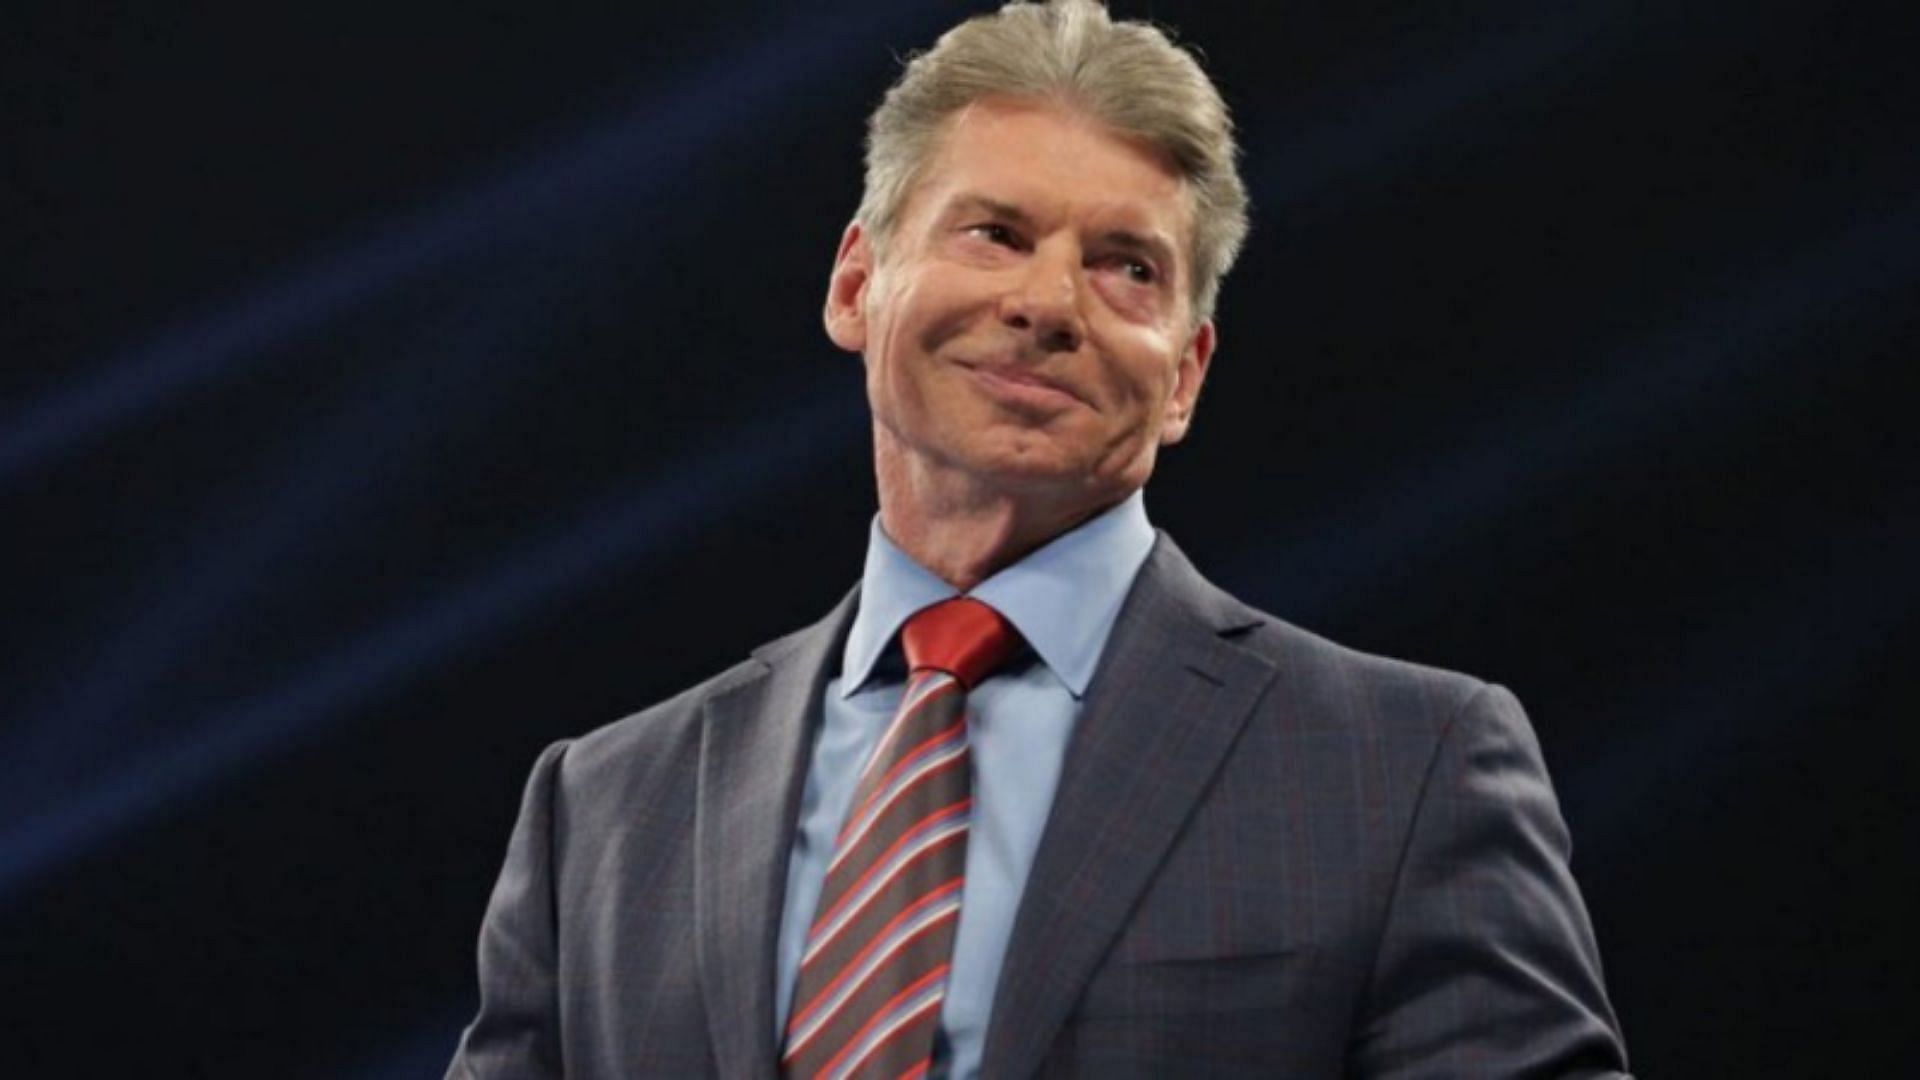 Vince McMahon in the Royal Rumble? It could happen.